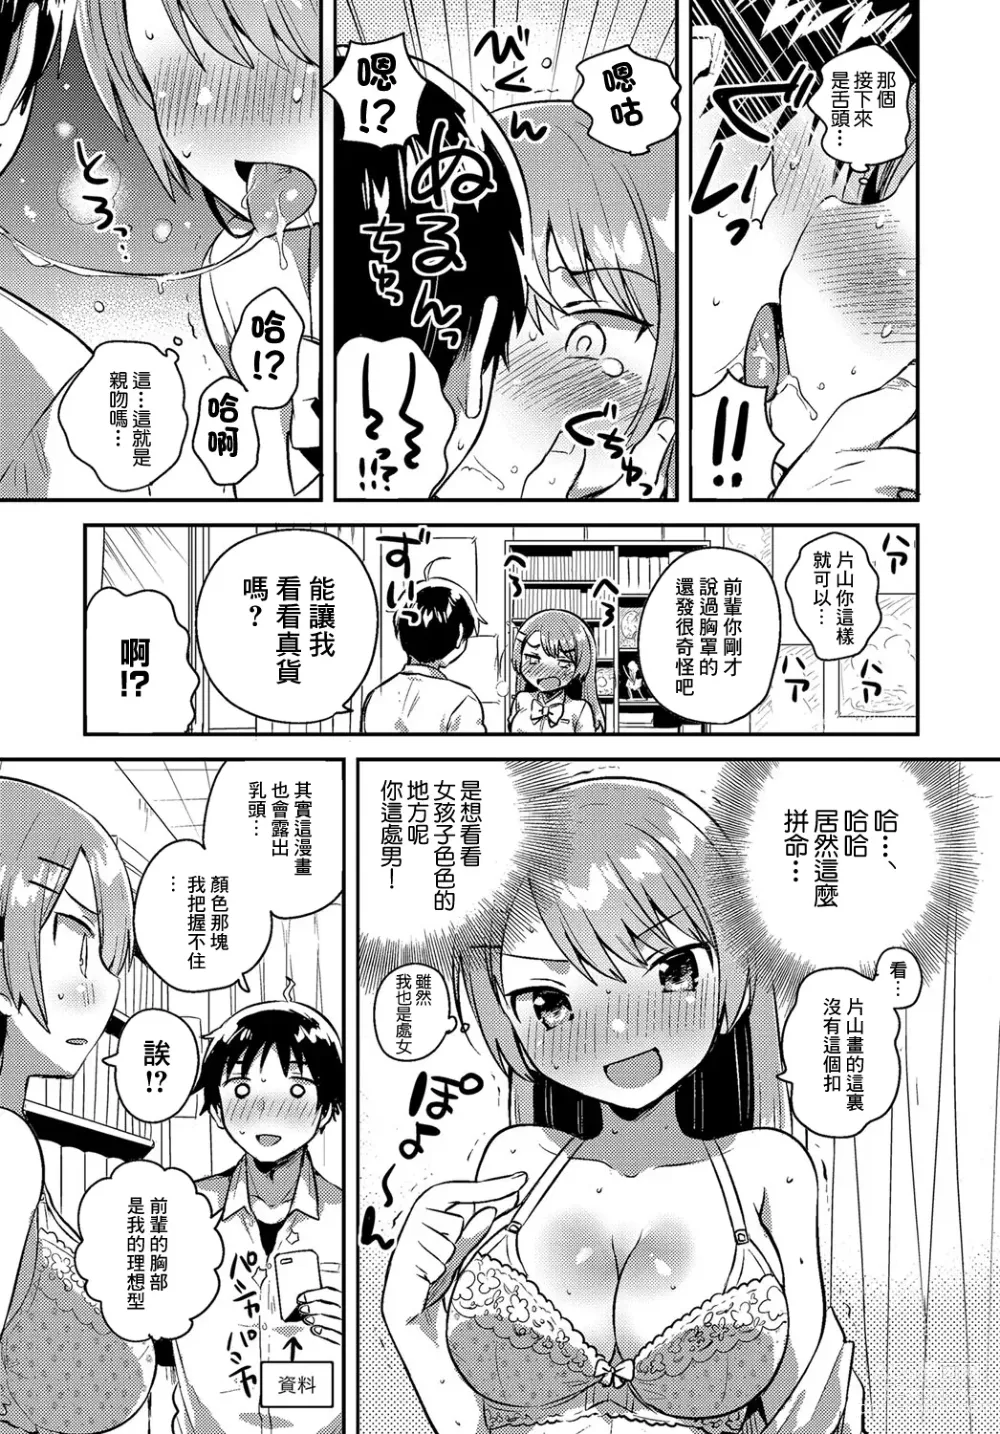 Page 5 of manga Detarame Revenge Match